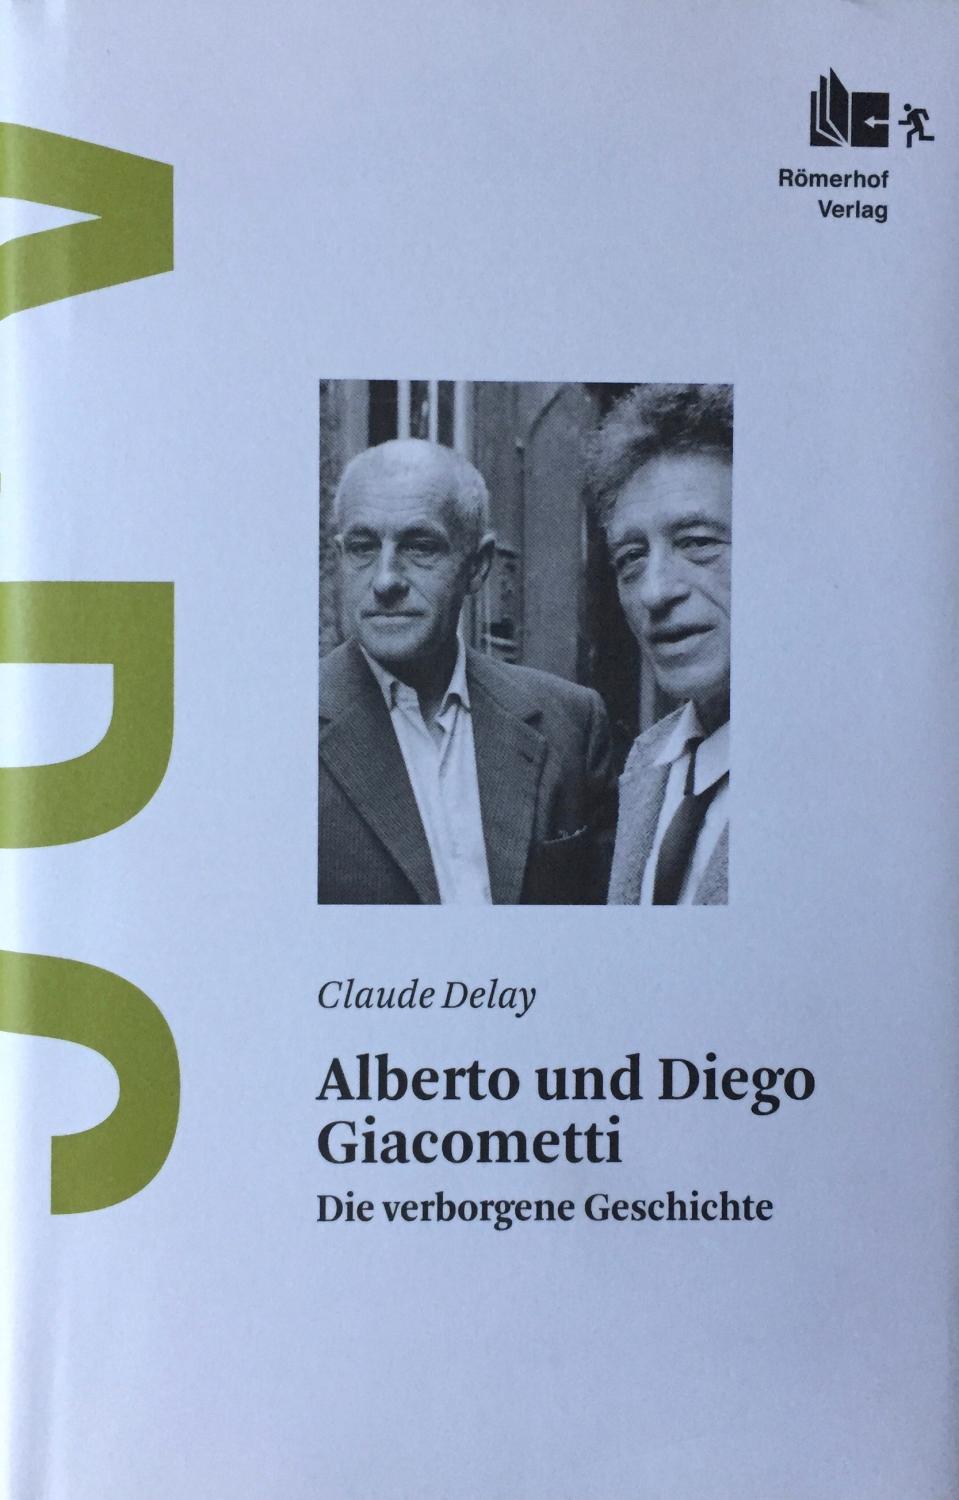 Giacometti, Alberto und Diego. Alberto und Diego Giacometti. Die verborgene Geschichte. - Claude Delay